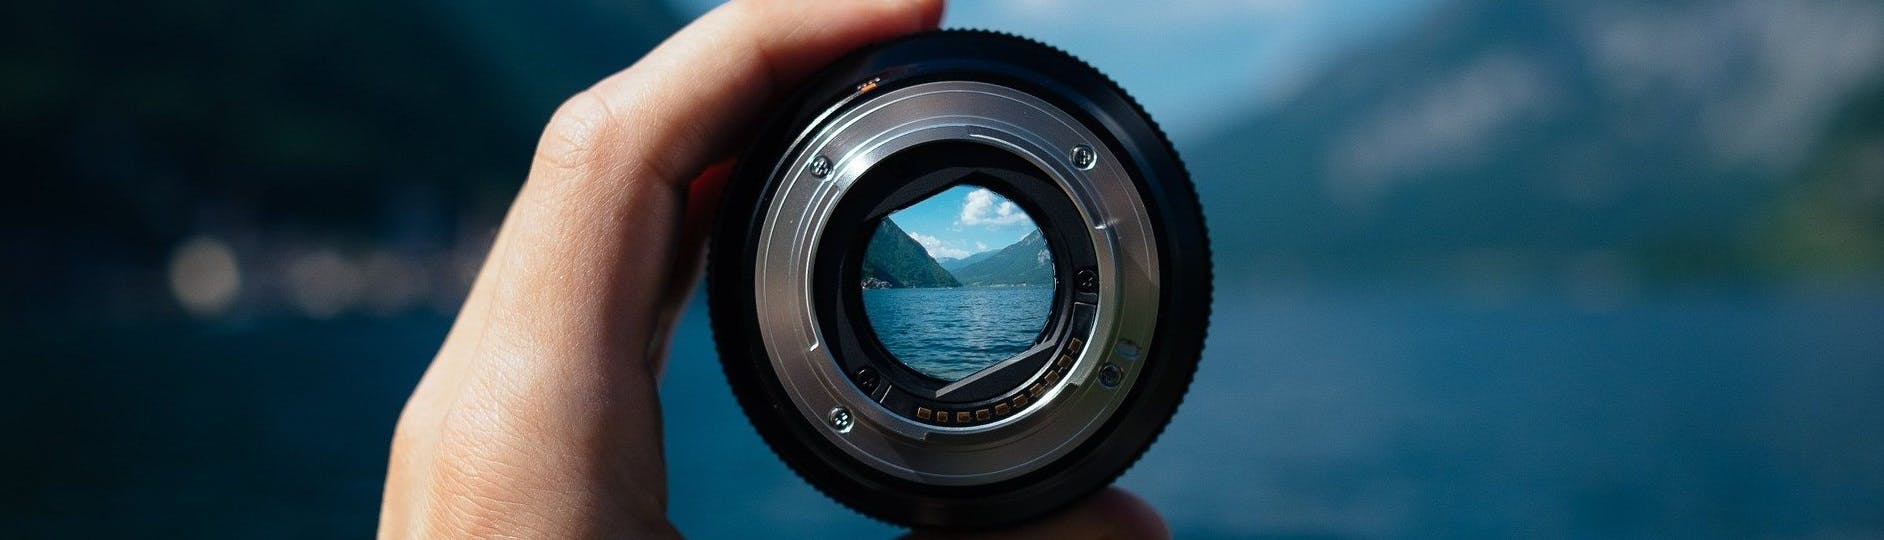 Camera lens capturing mountain scape